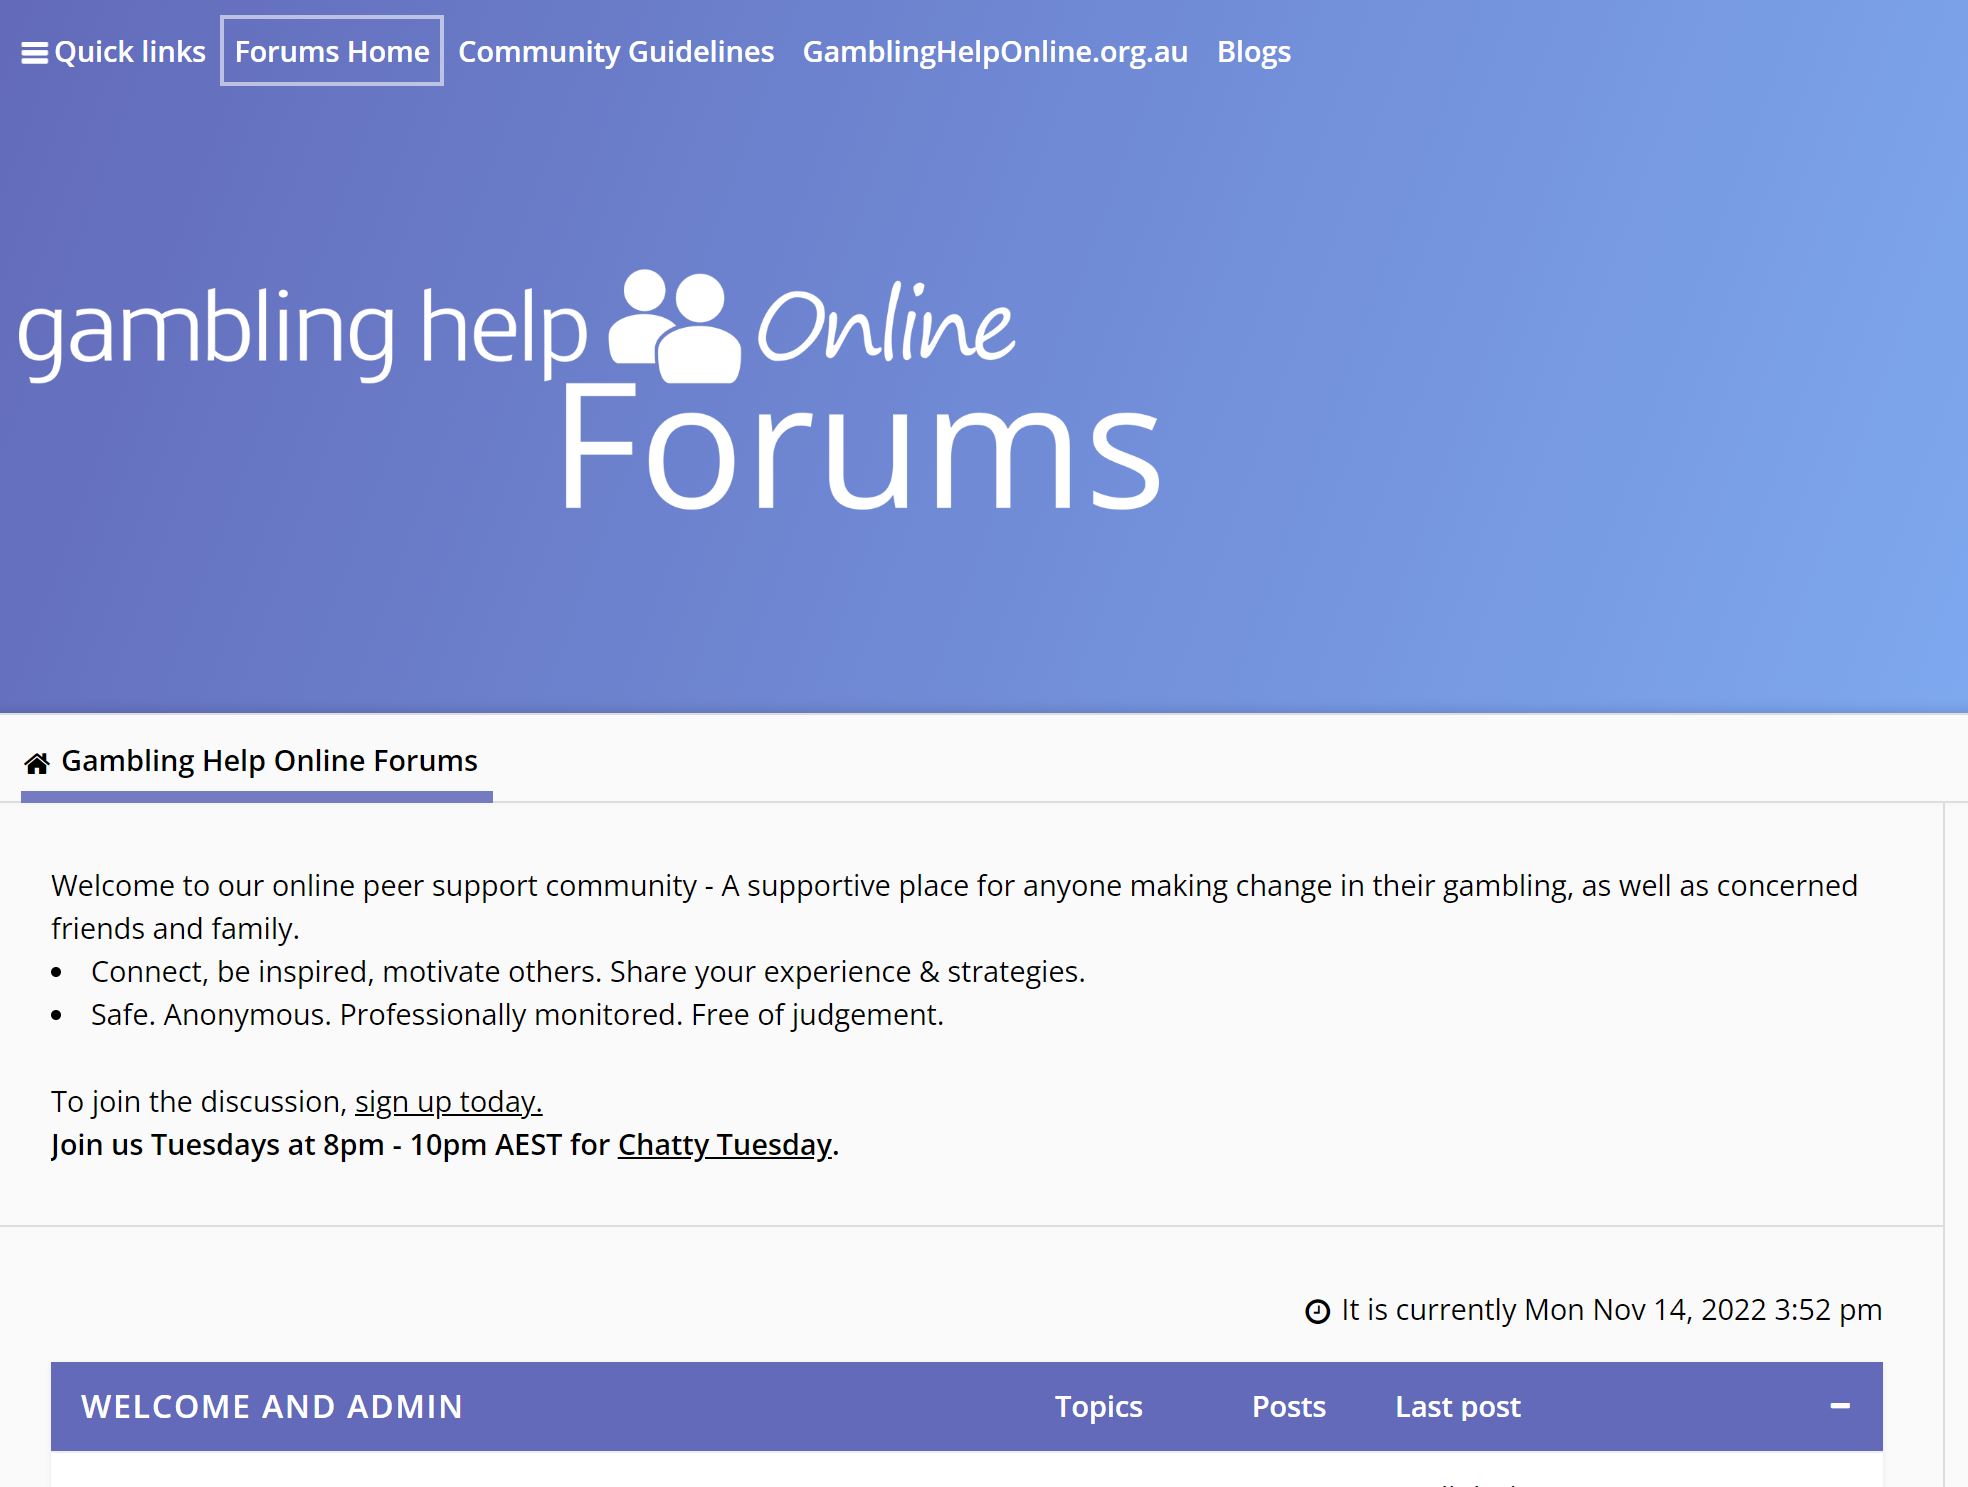 Gambling Help Online Forums